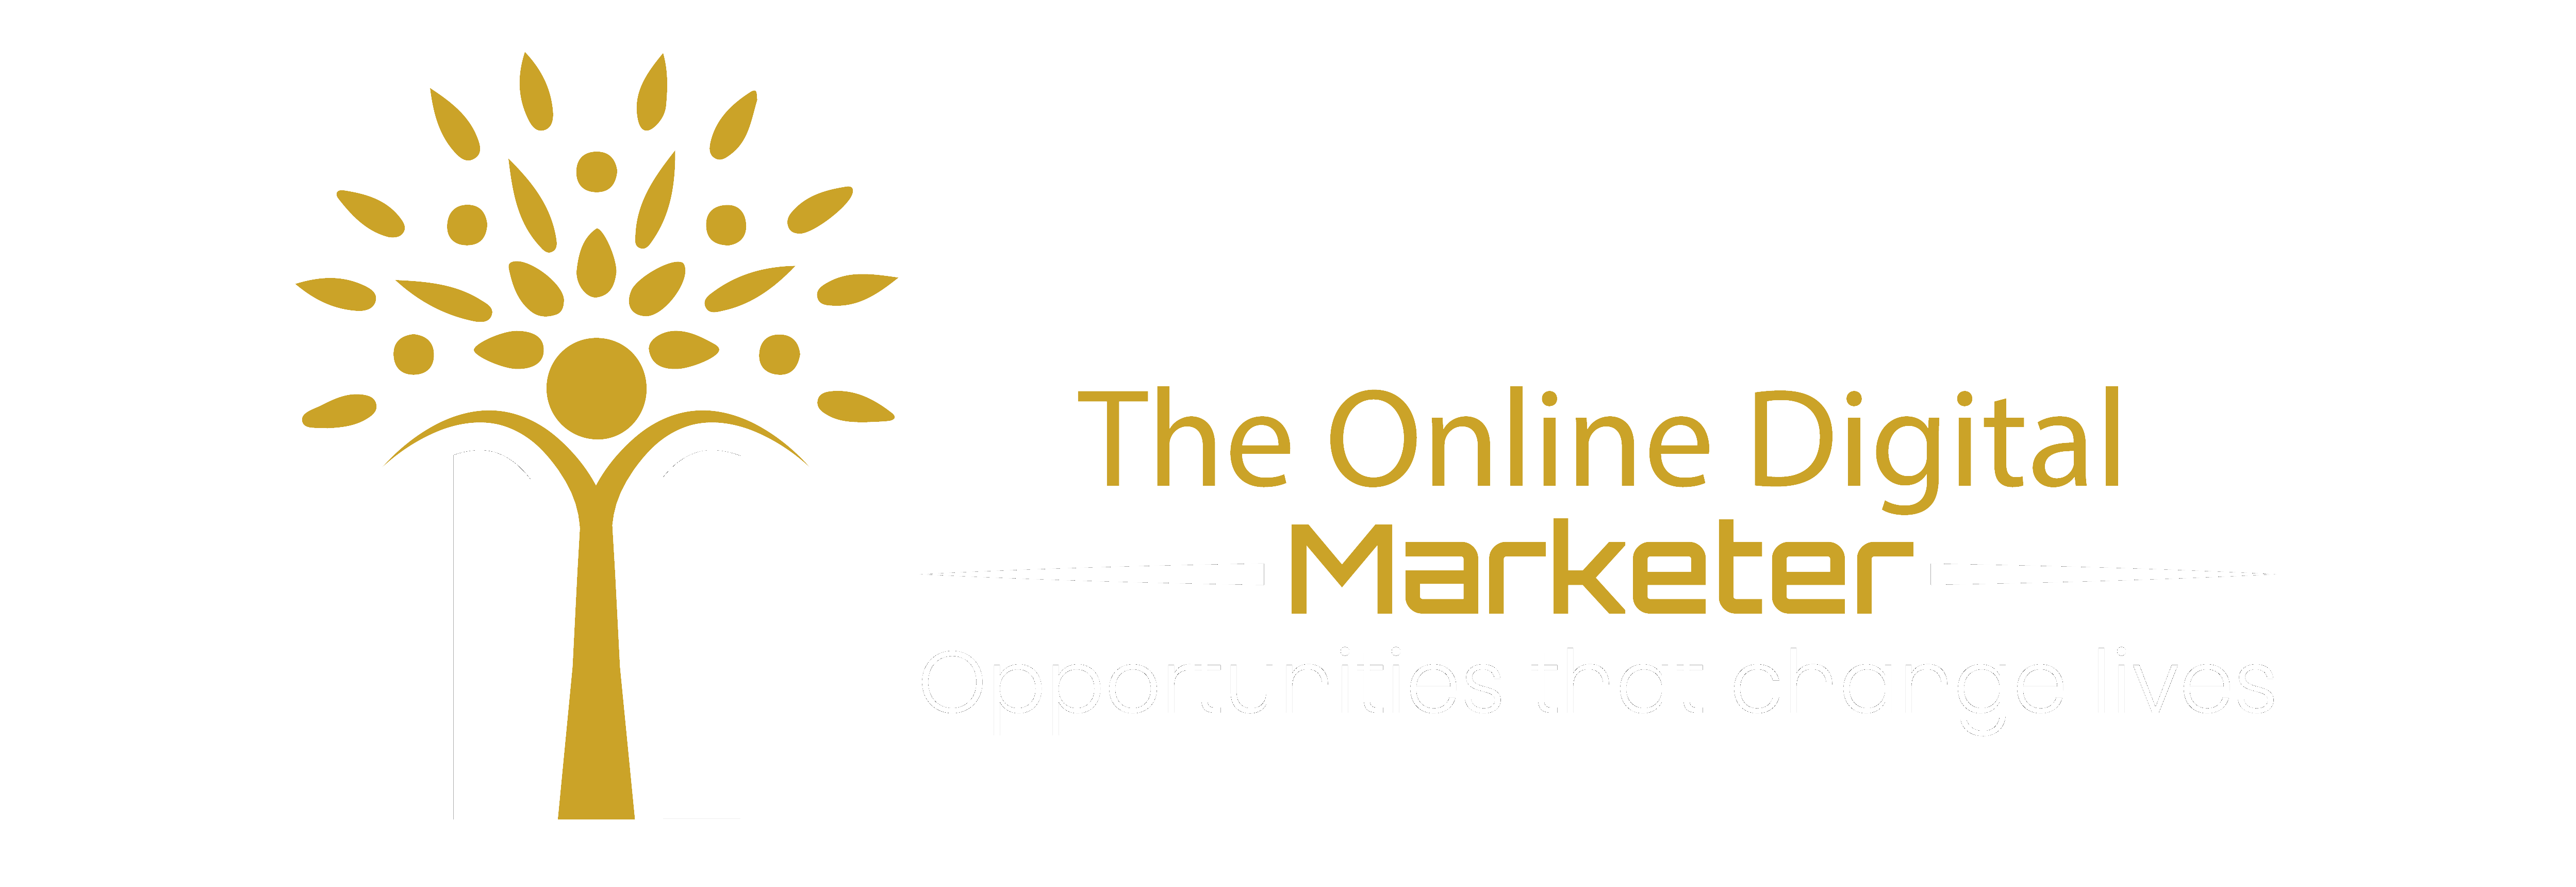 The Online Digital Marketer